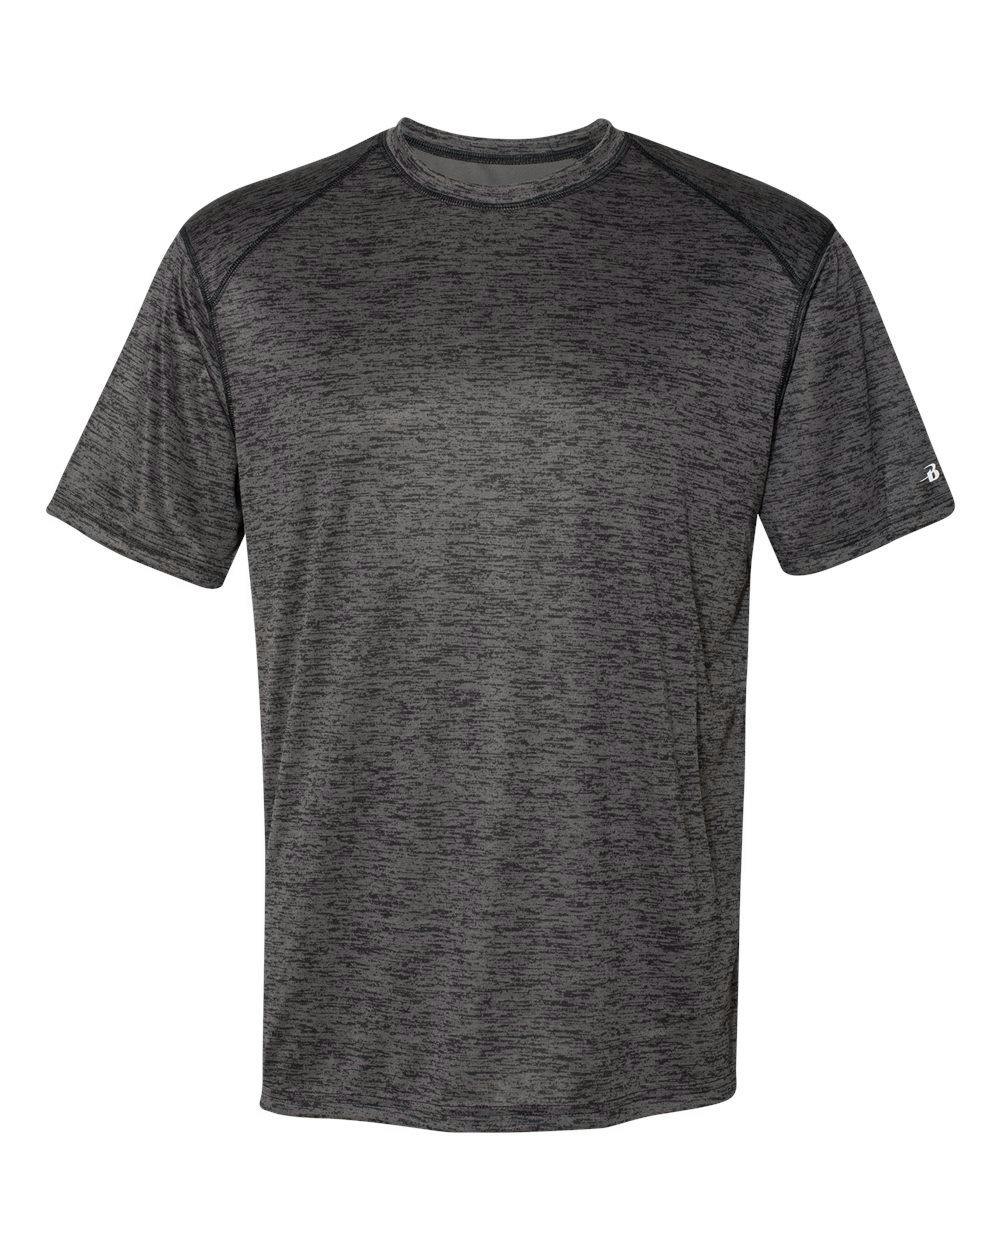 Image for Tonal Blend T-Shirt - 4171